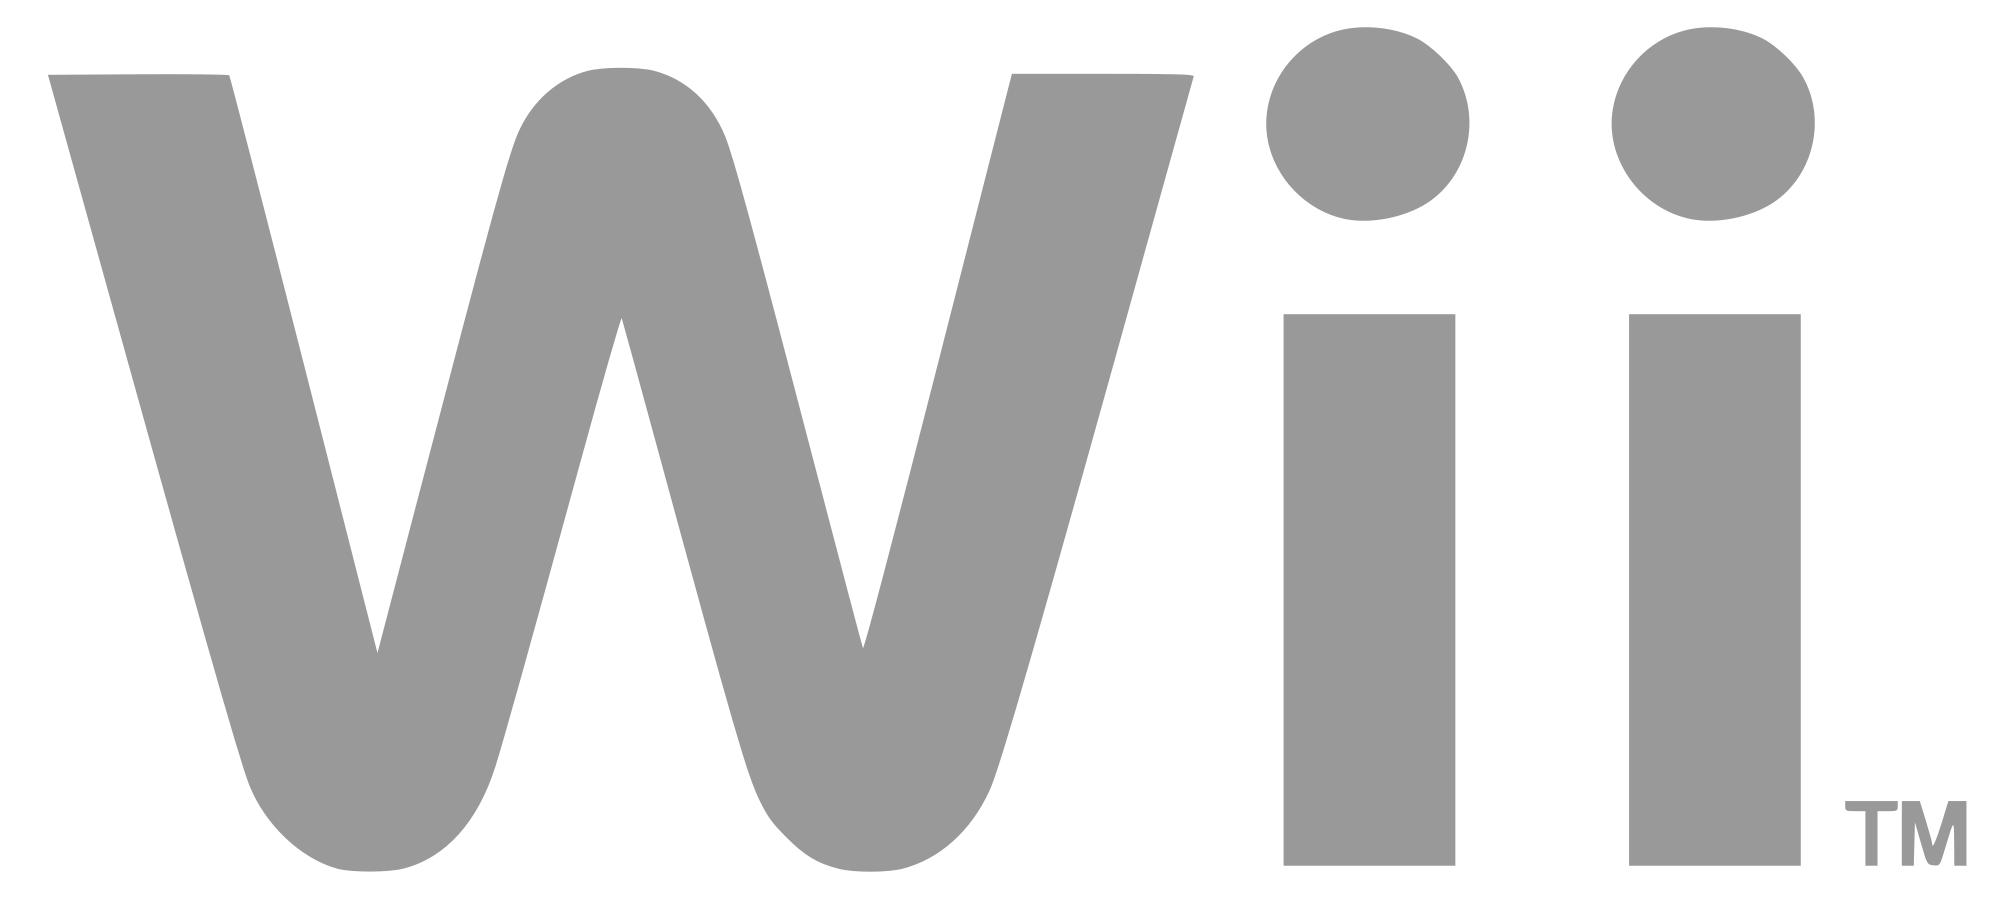 Wii Brand Logo